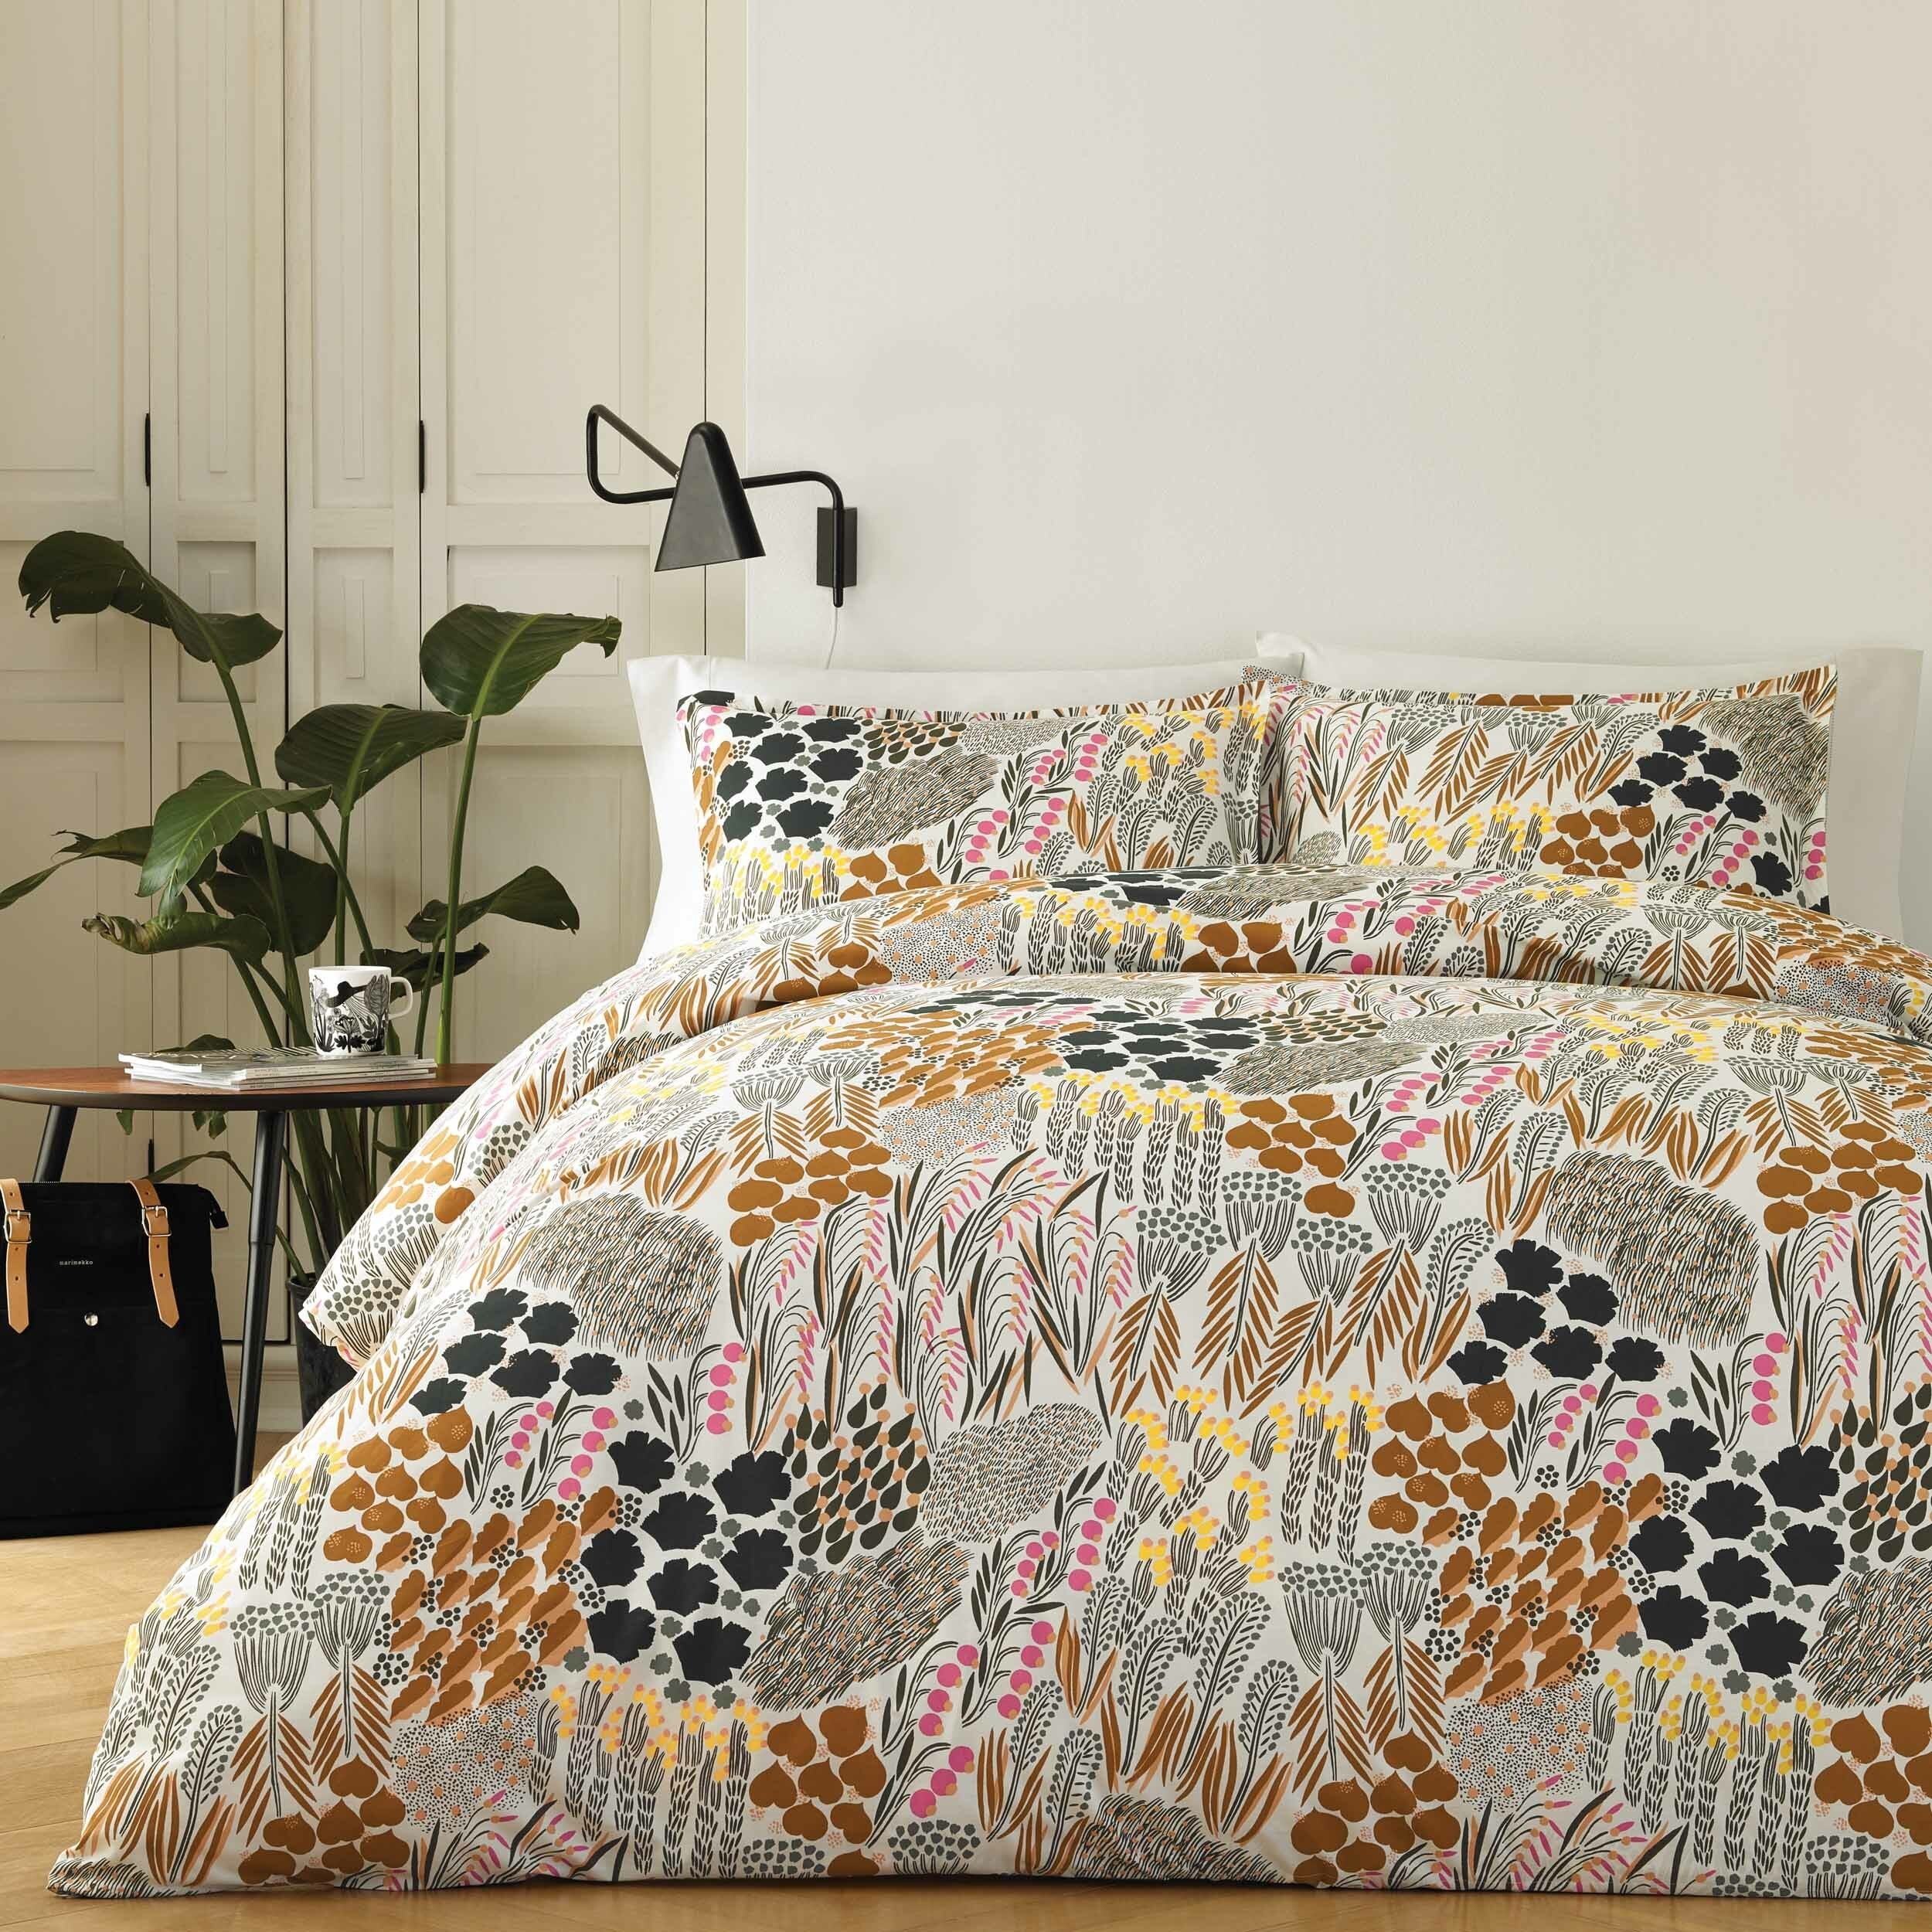 the floral patterned duvet cover